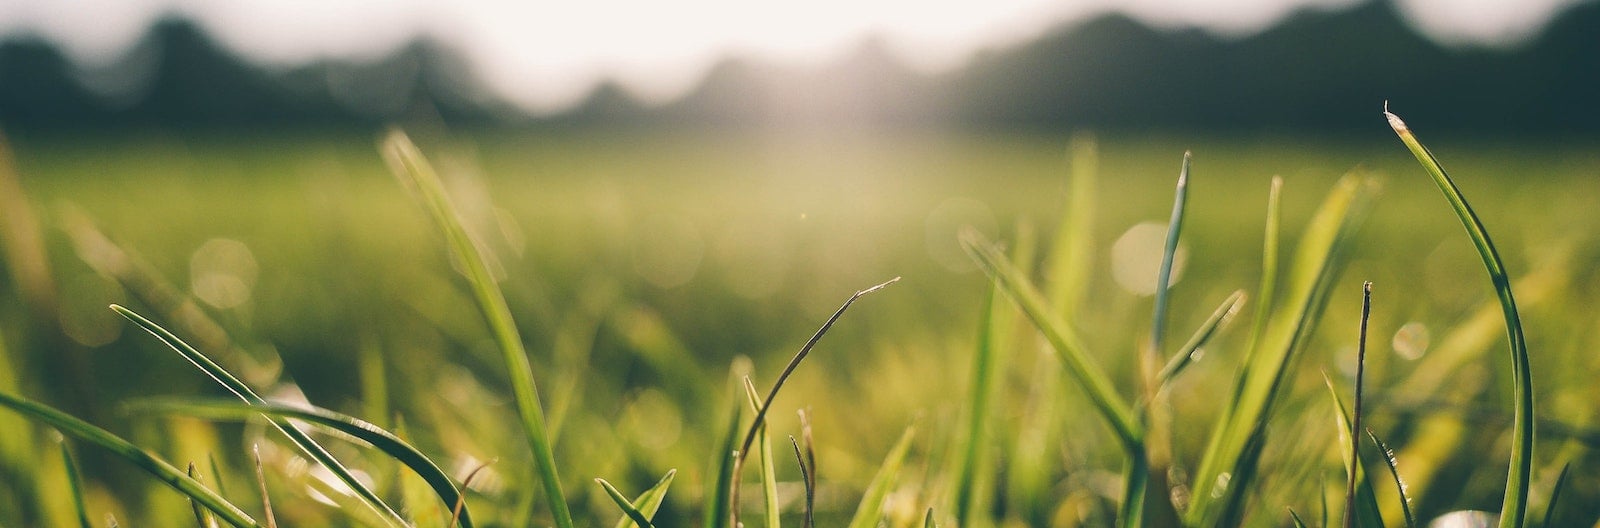 grass-meadow-sunshine-9056-1